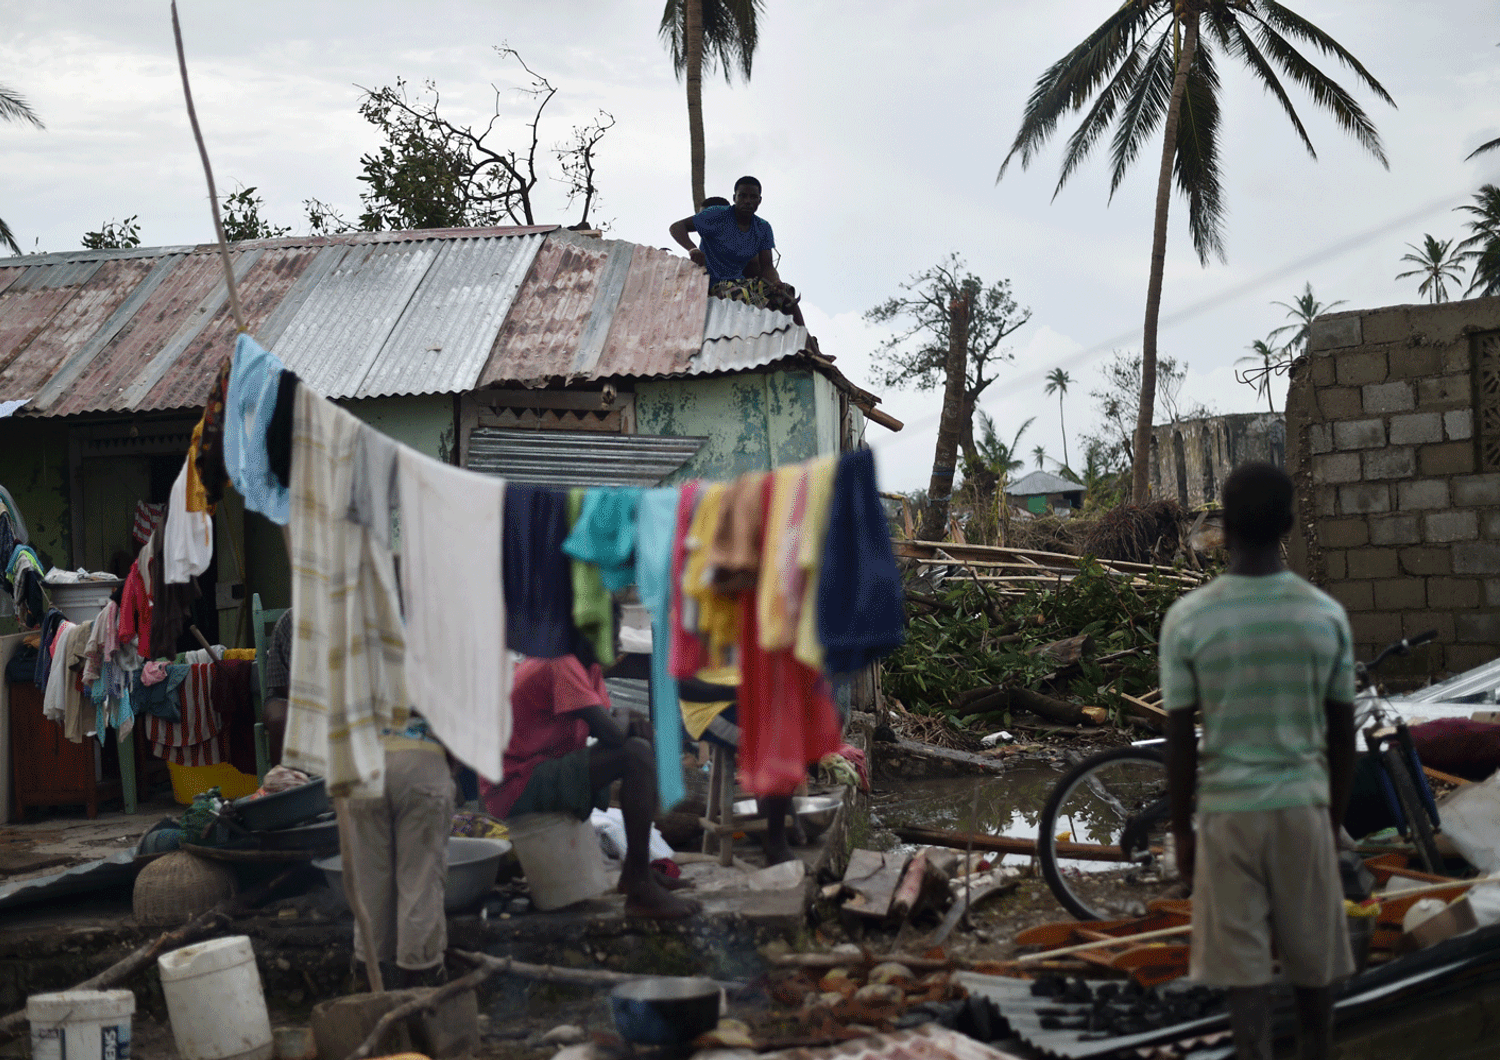 Uragano Matthew devasta Haiti (Afp)&nbsp;